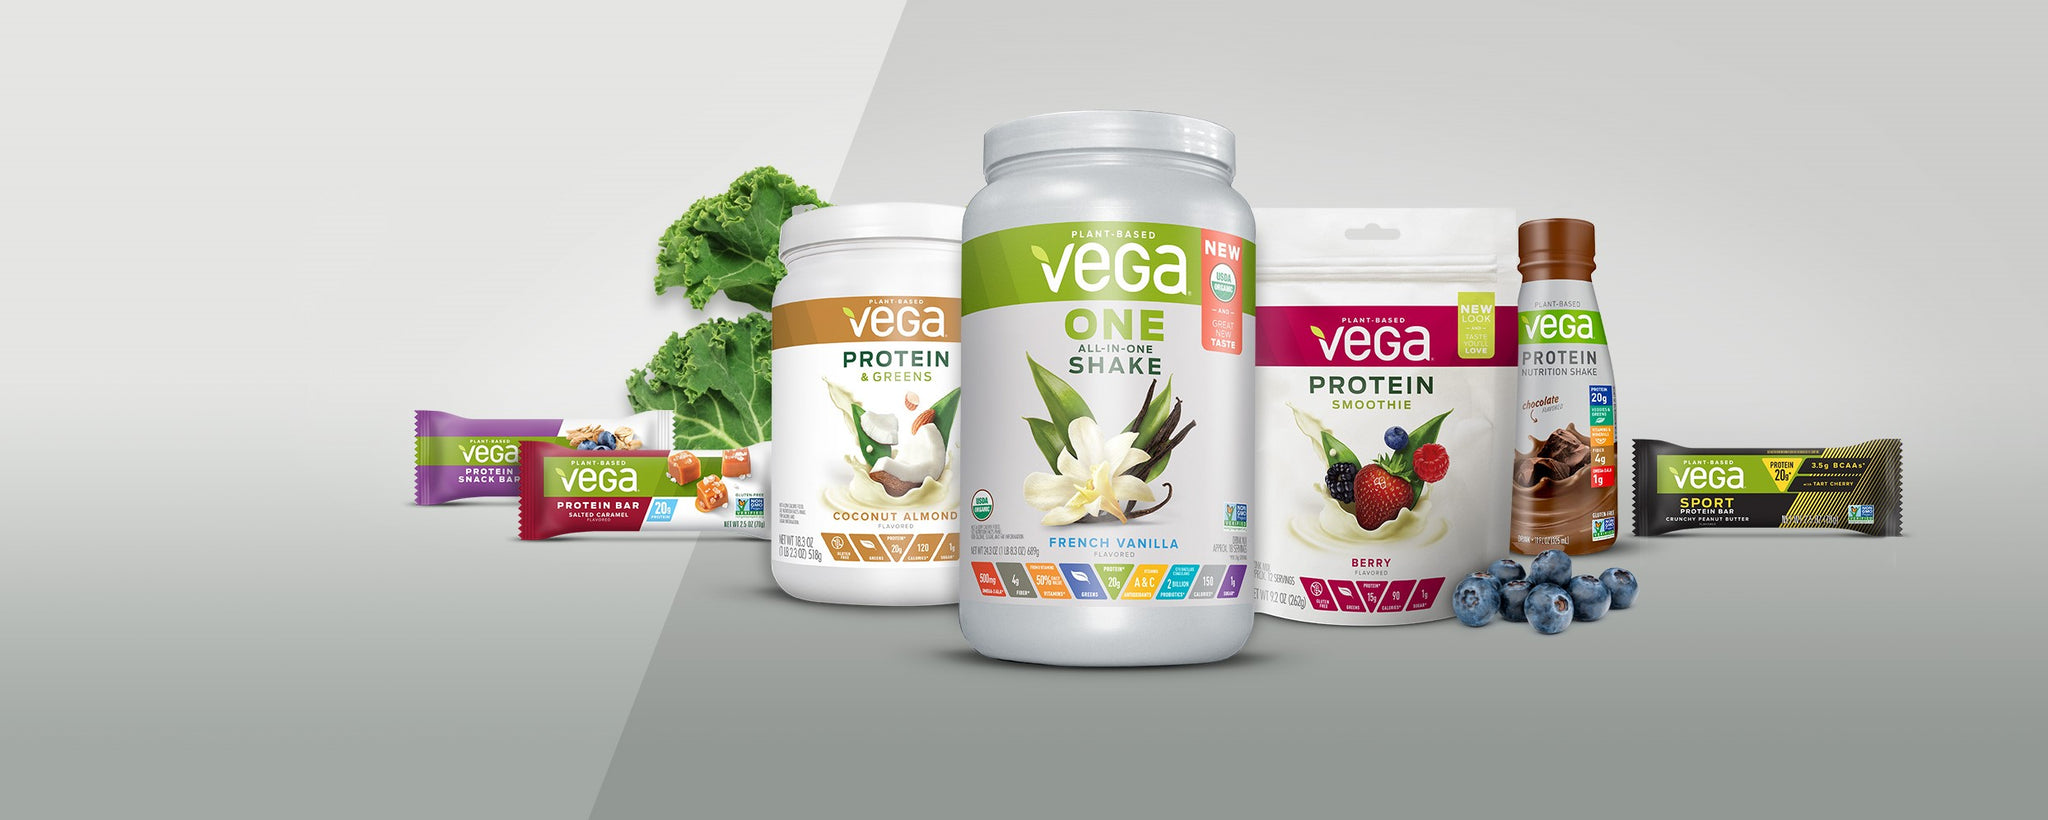 Major Product Portfolio Updates for Vega® Include New Vega One® Organic All-in-One Shake